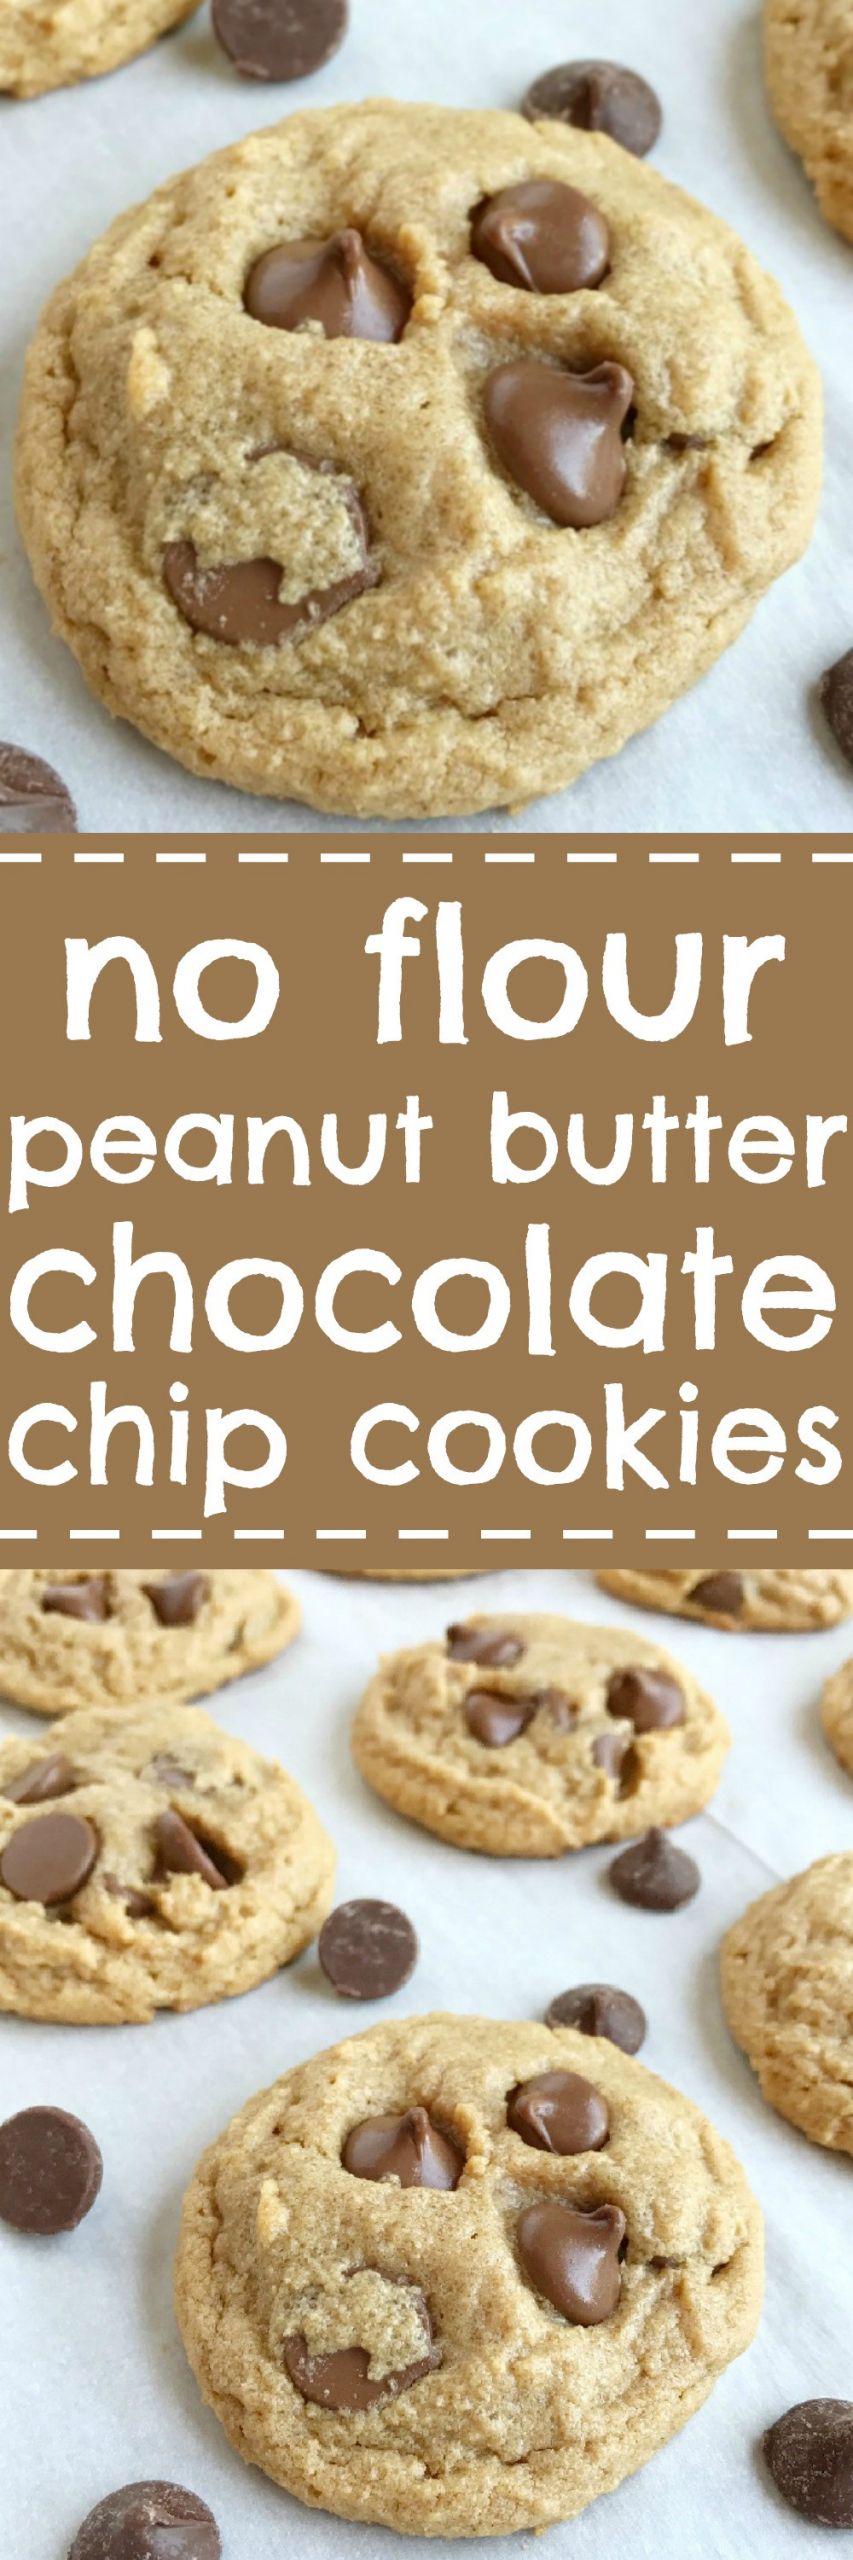 Peanut Butter Oatmeal Cookies No Flour
 No Flour Peanut Butter Chocolate Chip Cookies To her